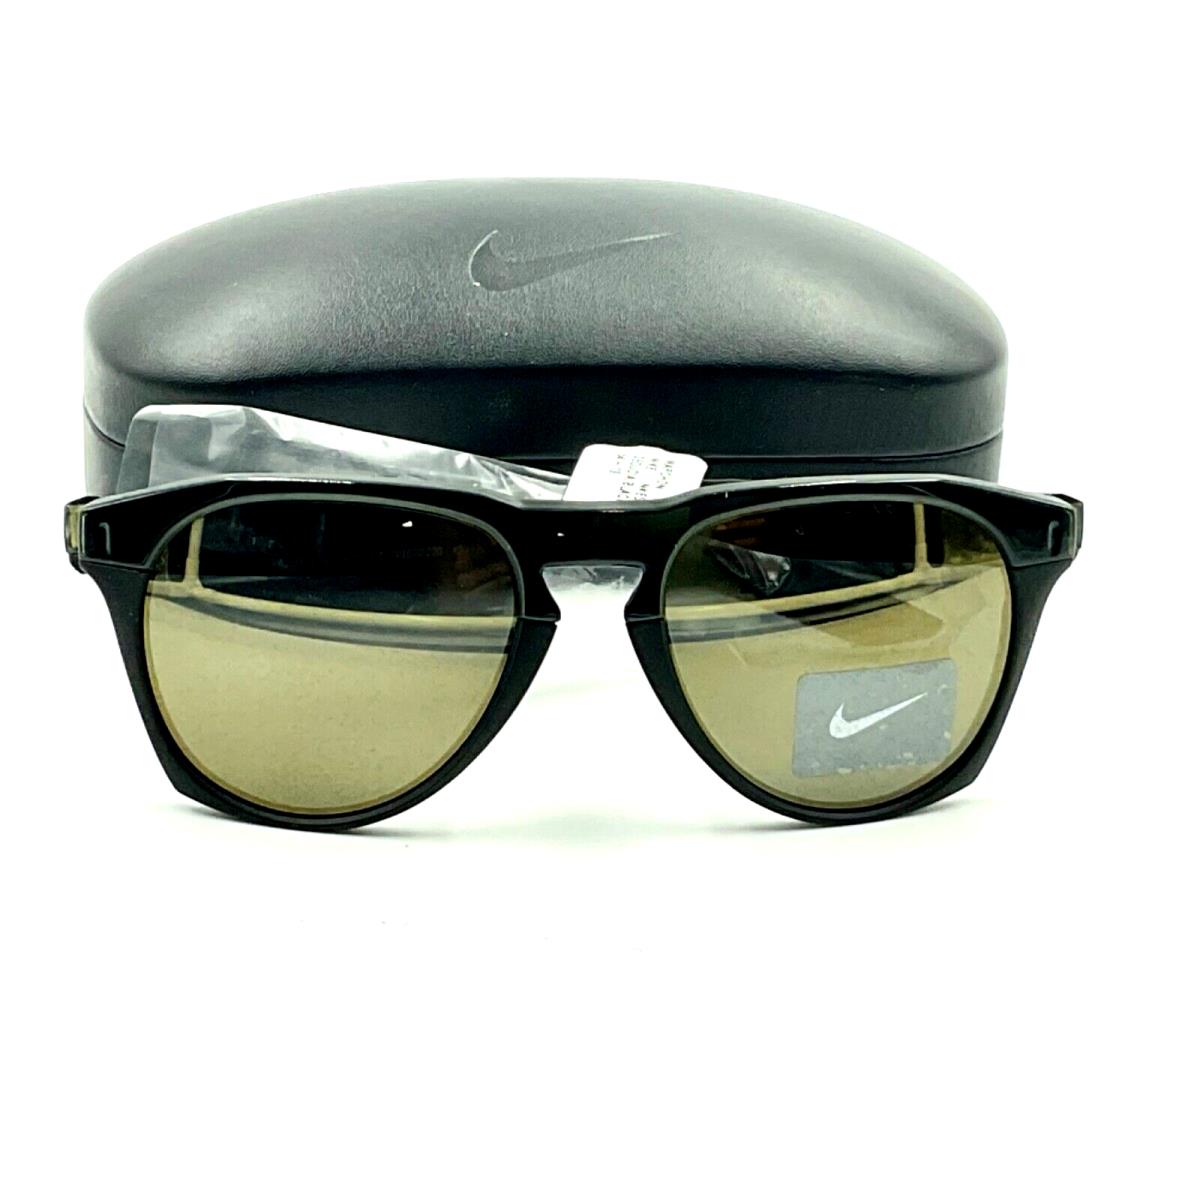 Nike Marchon Men s Sunglasses Estnl Navigator M EV1020 220